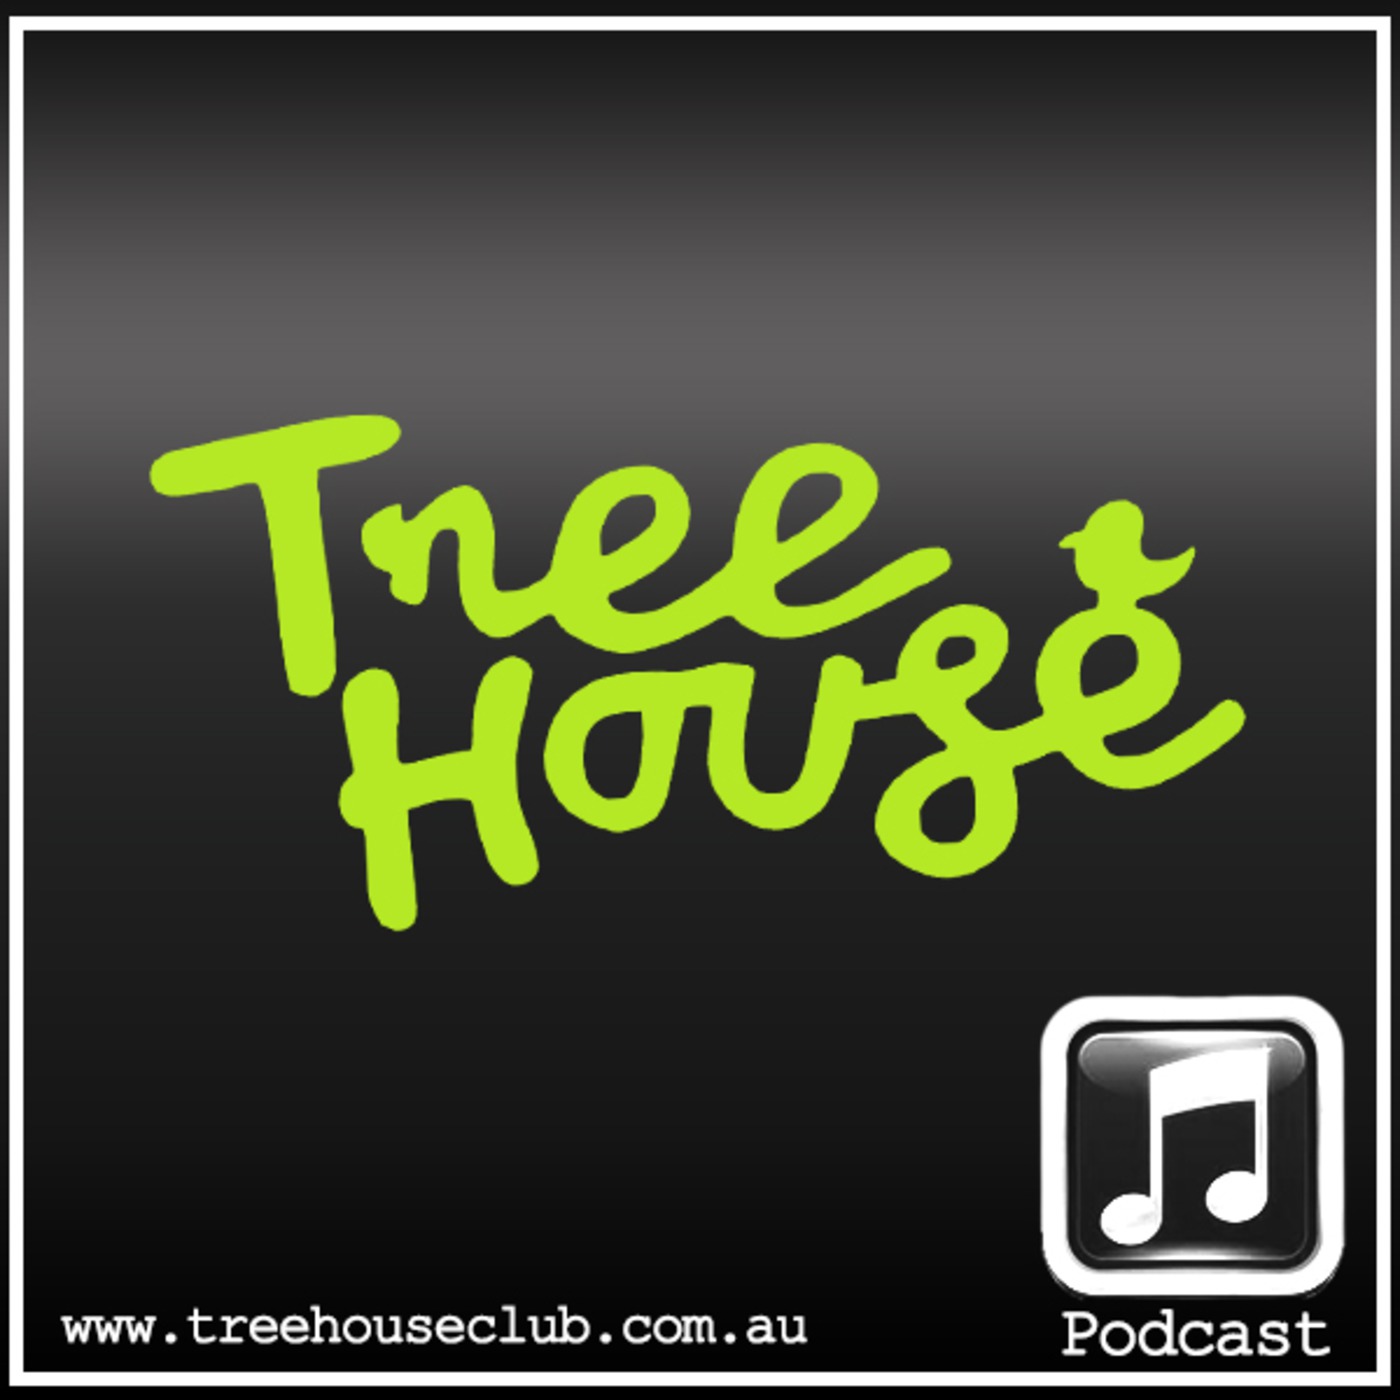 Treehouse Saturdays' Podcast